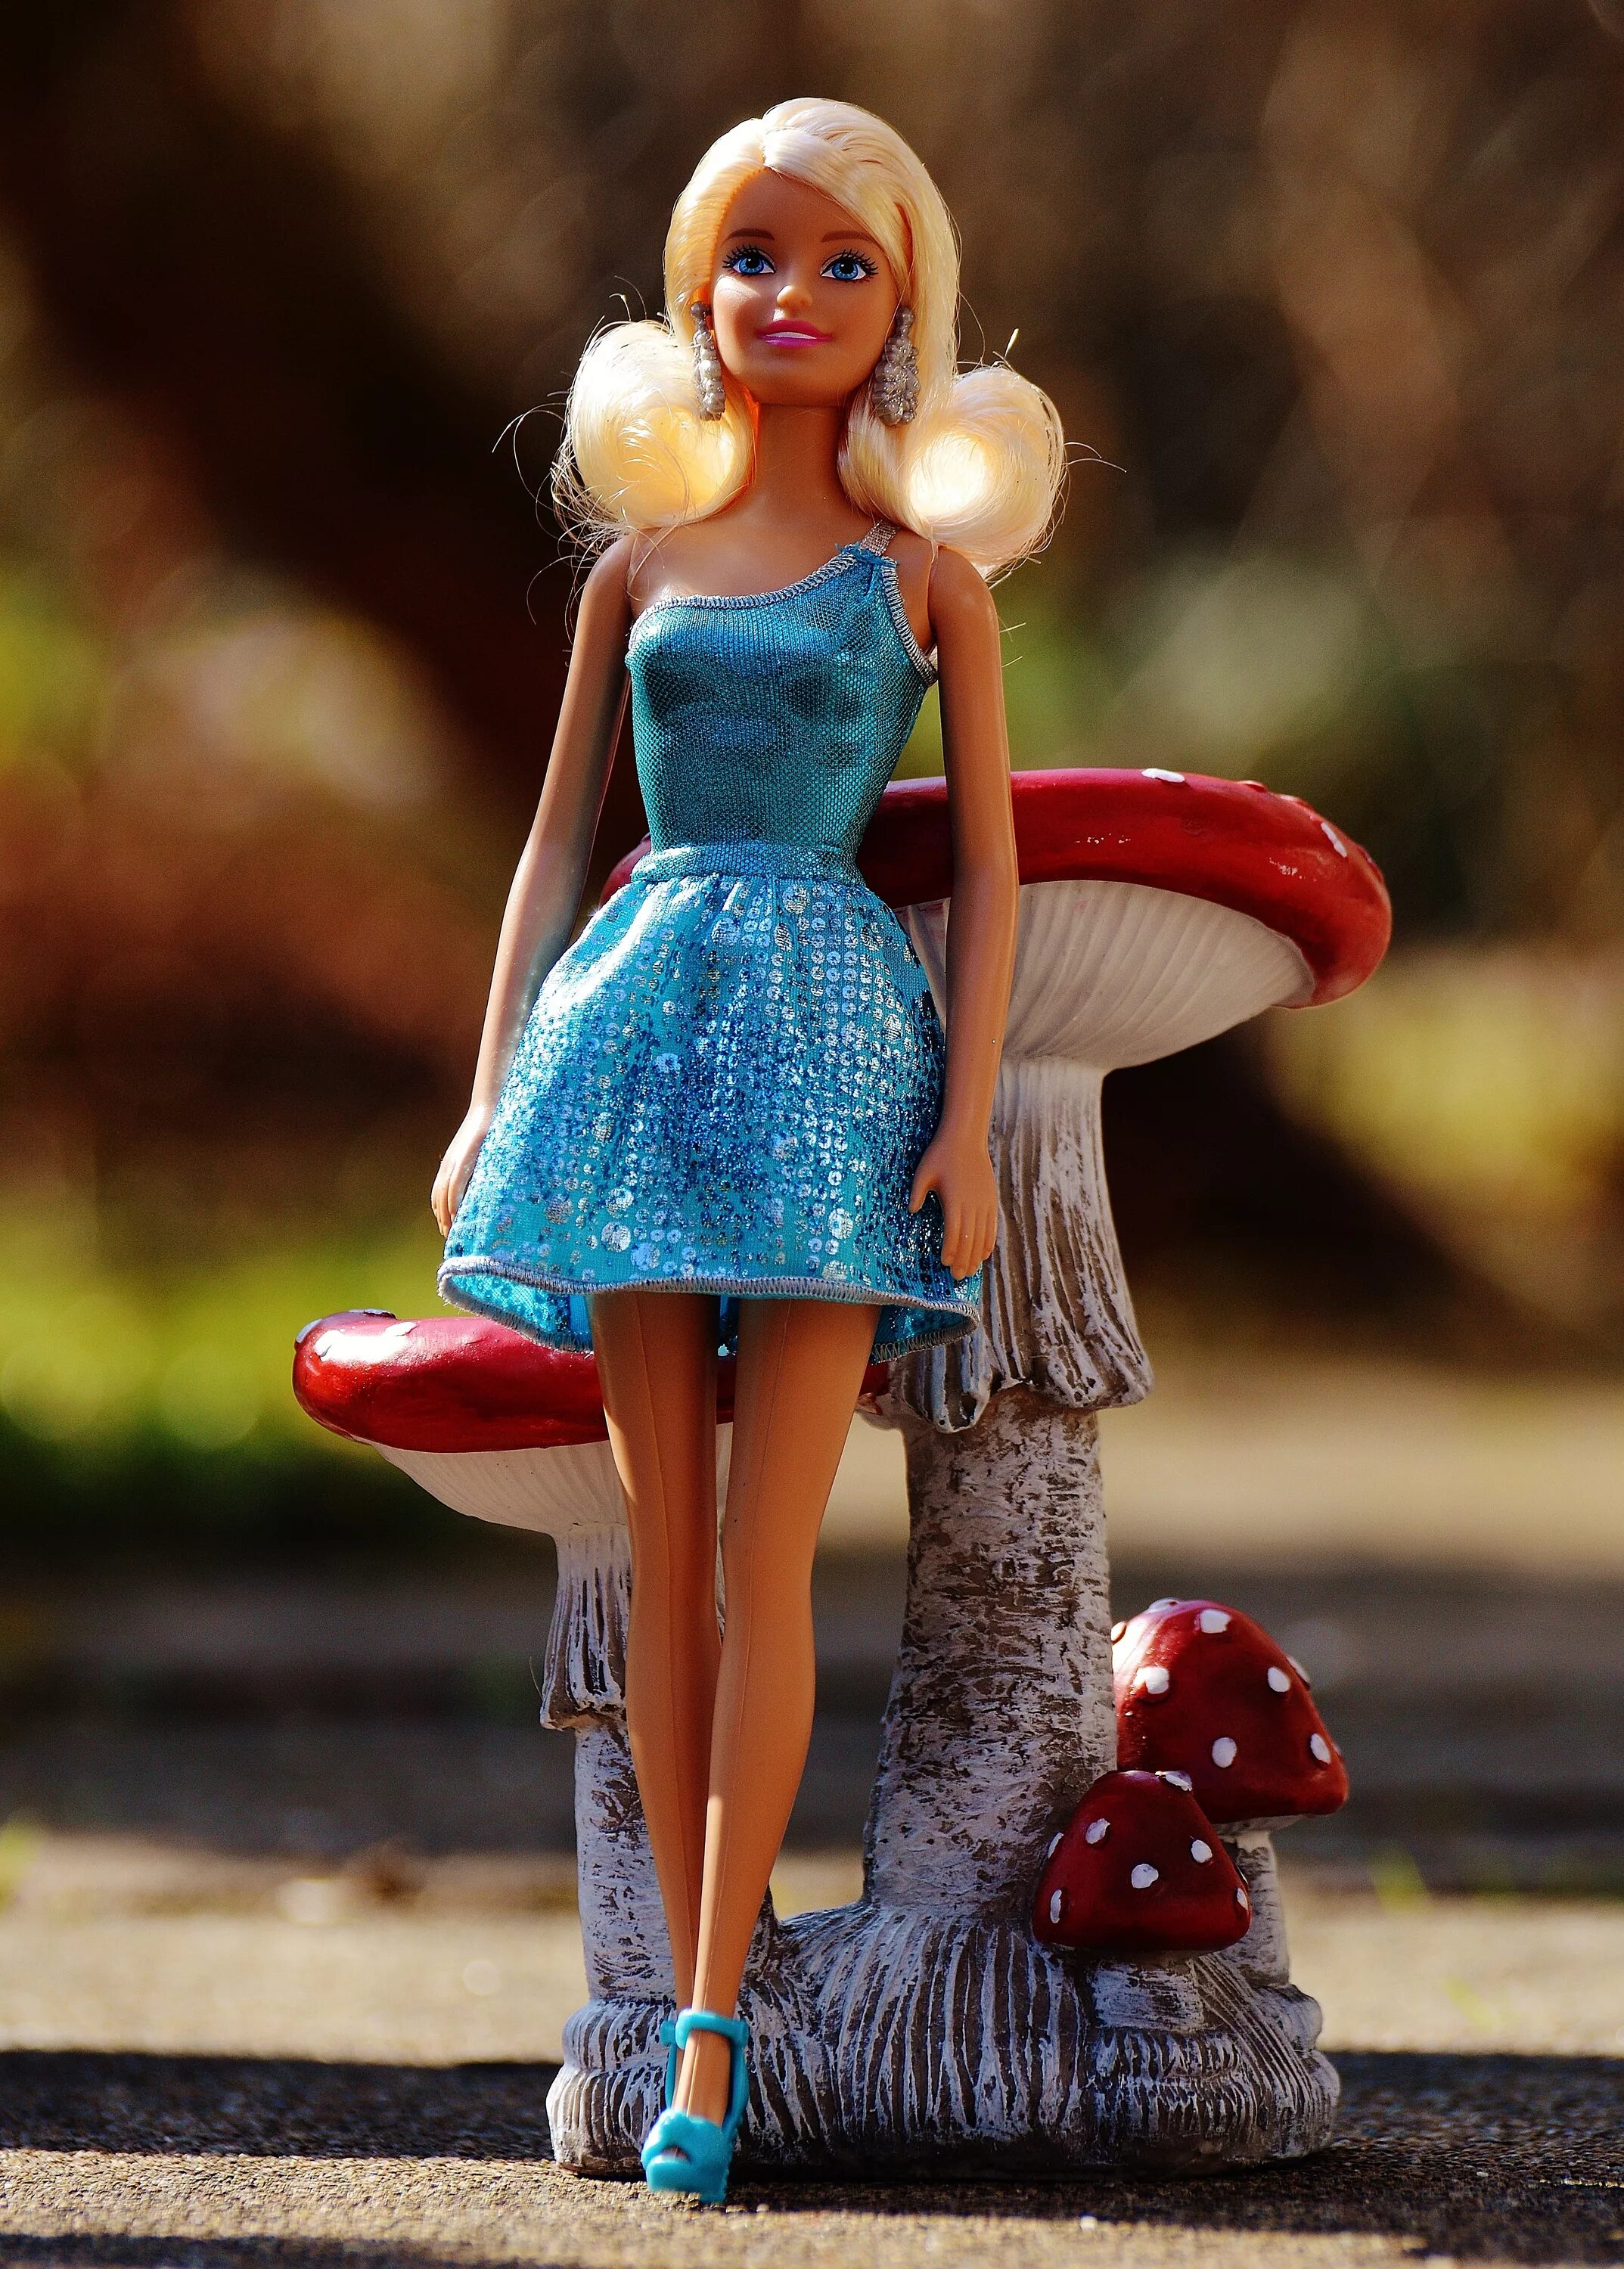 Blonde toys. Красивые куклы Барби. Самые красивые куклы Барби. Красивые игрушки для девочек. Самая красивая кукла Барби на свете.